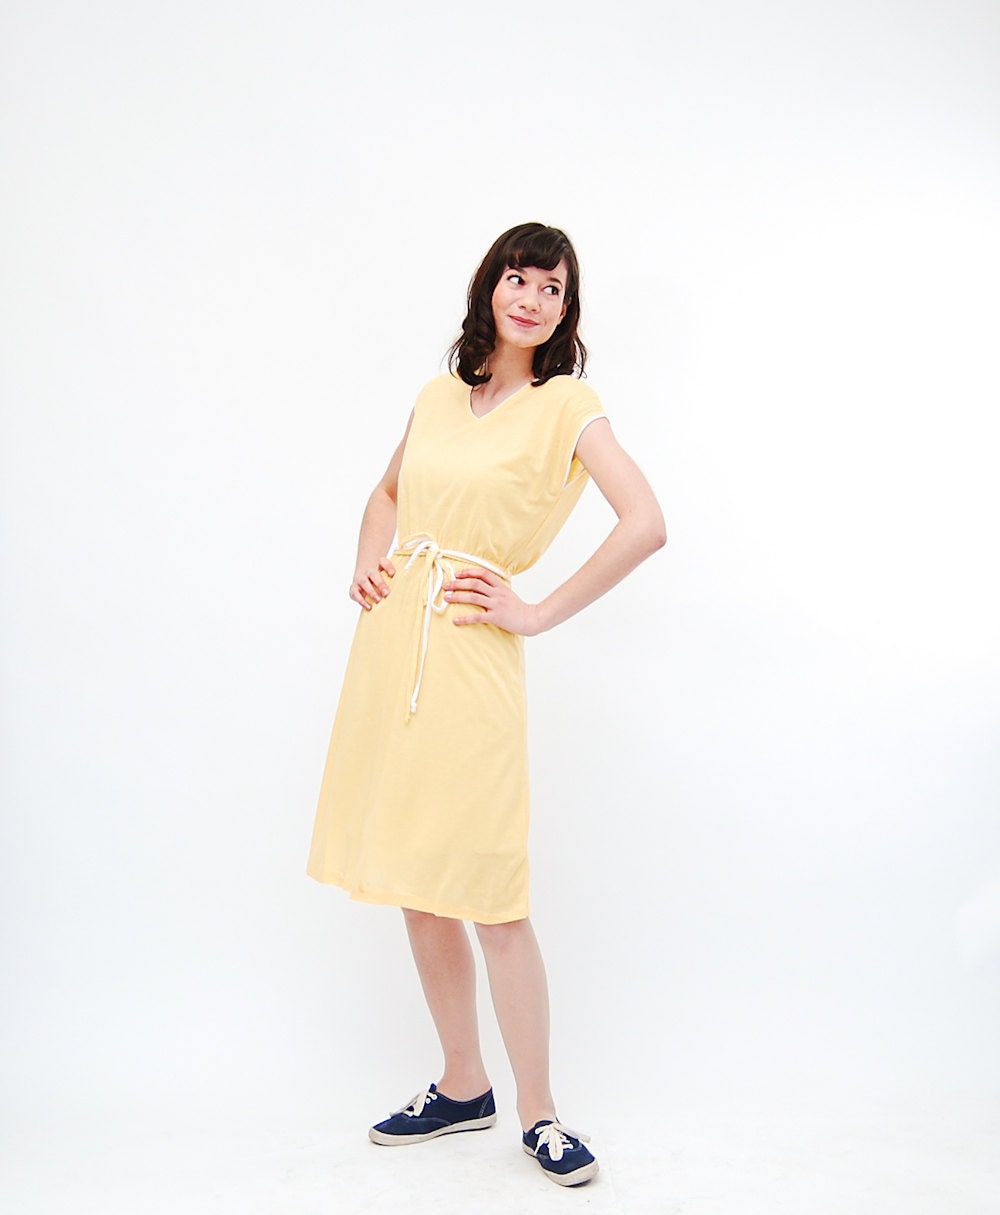 Vintage 1980s Summer Dress - 80s Summer Dress - Sunshine Yellow